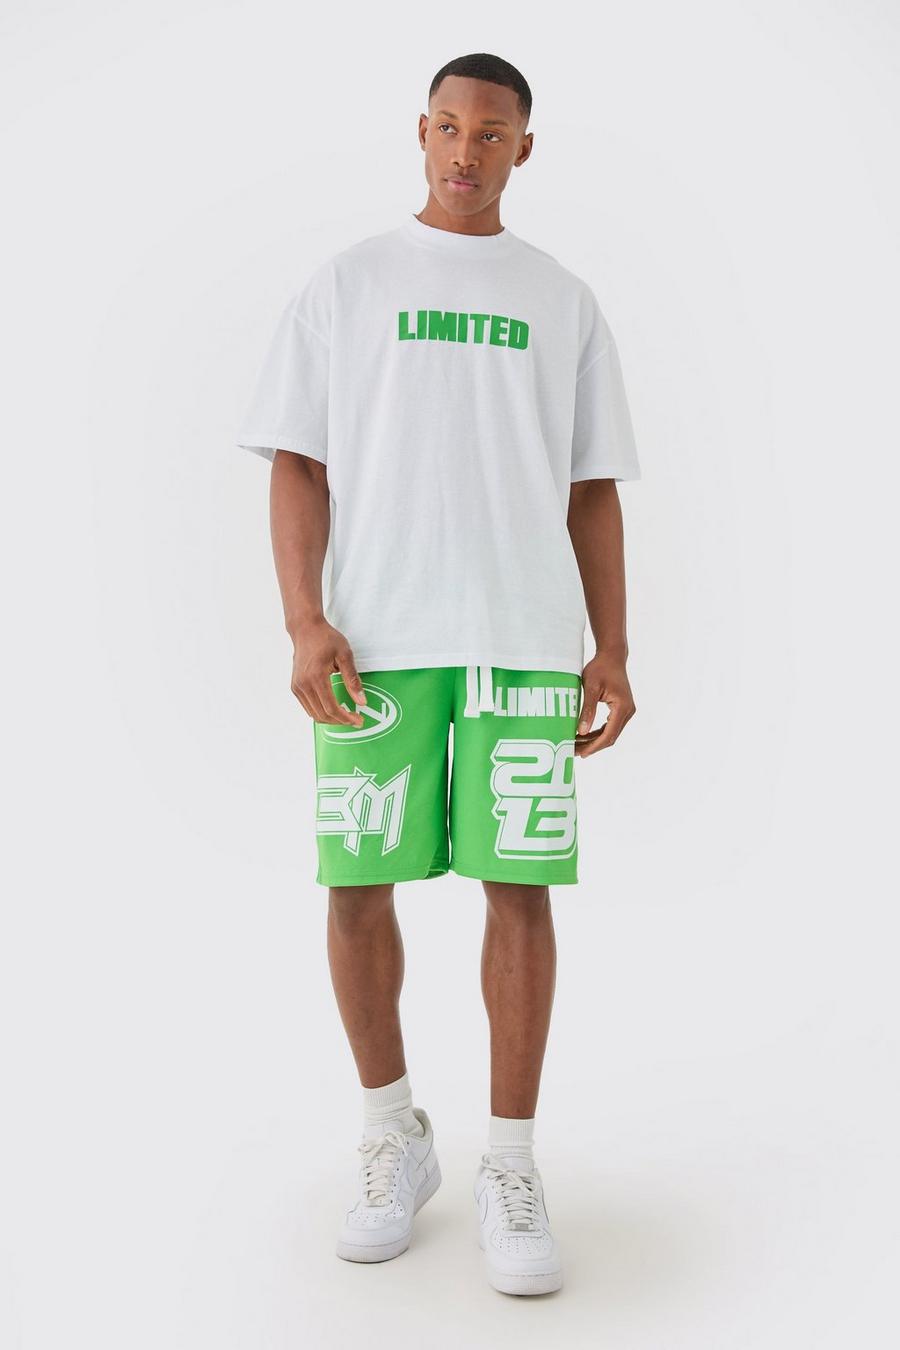 Pantalón corto de malla y camiseta oversize con cuello extendido Limited, Green